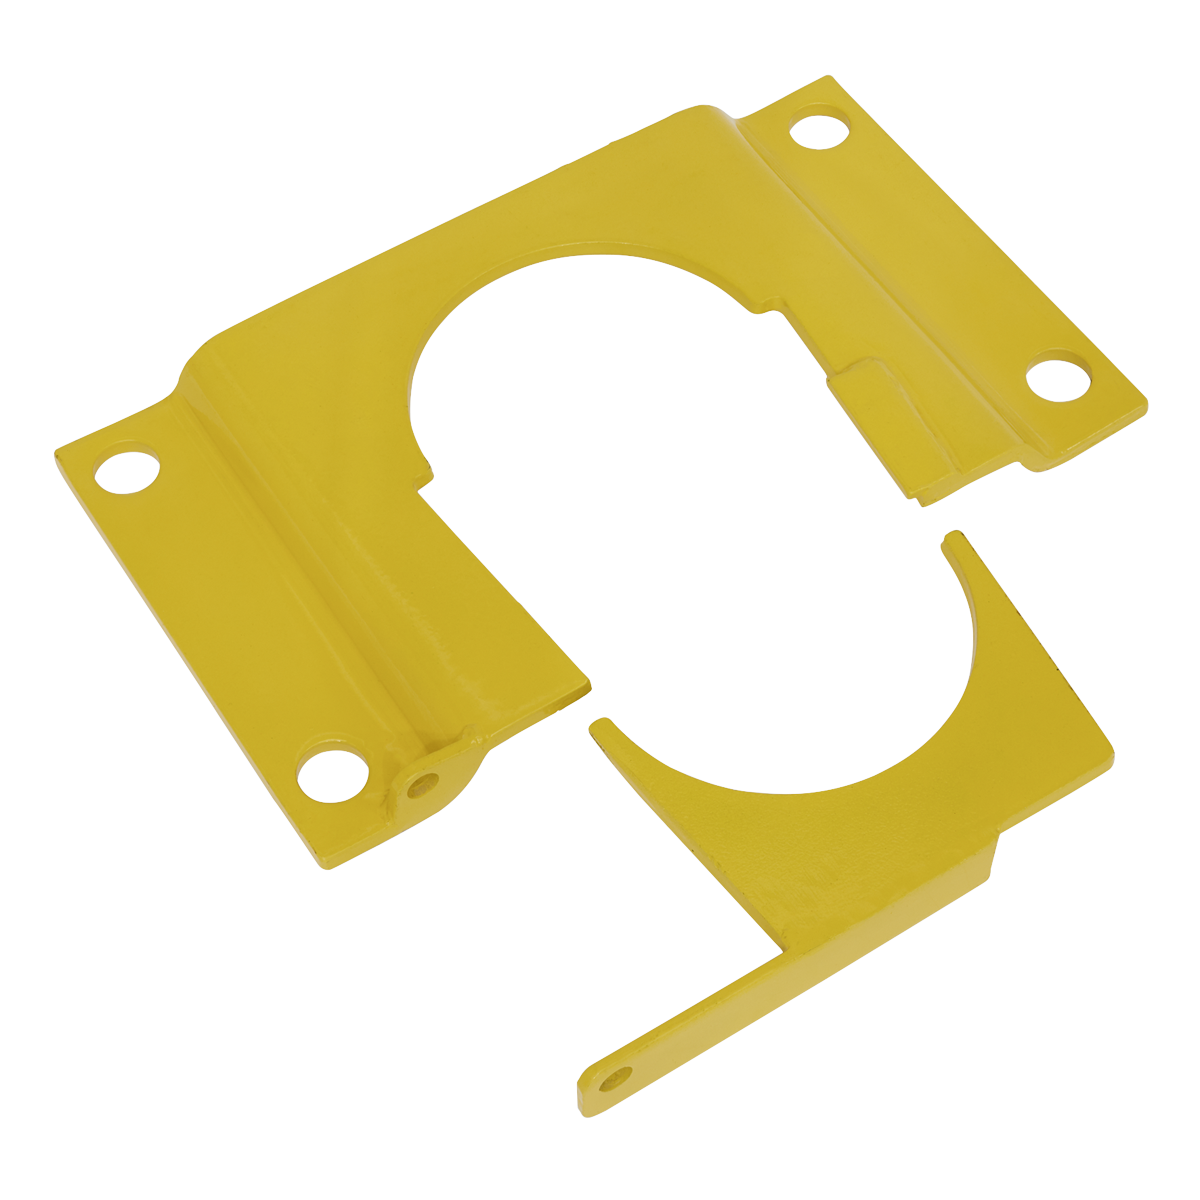 Removable Bollard Base Plate - Locking